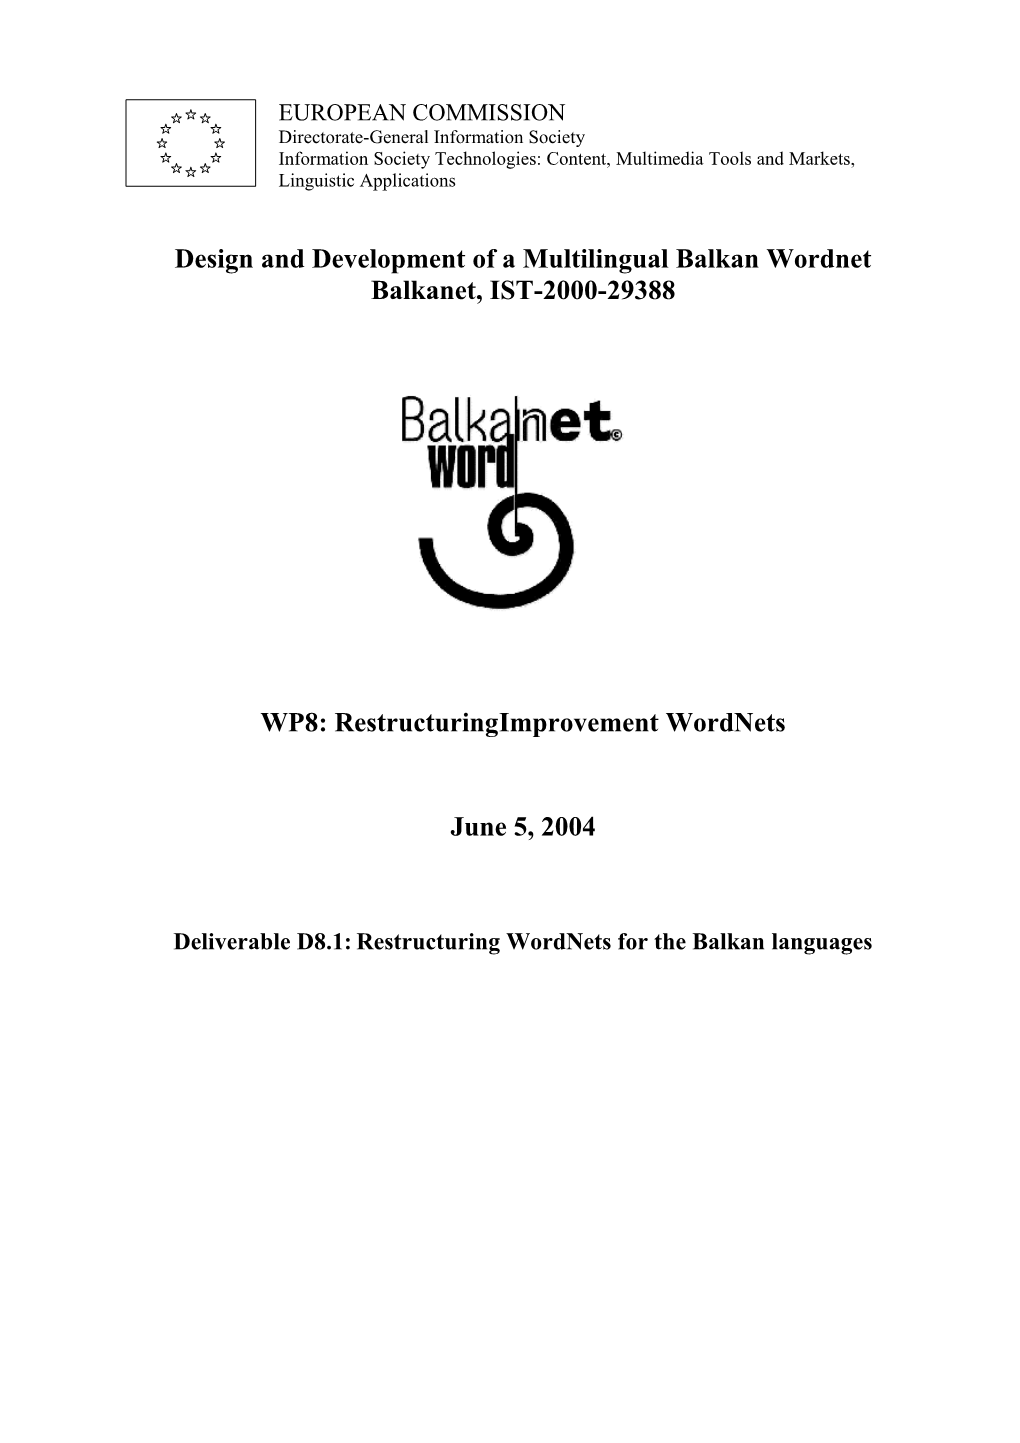 Design and Development of a Multilingual Balkan Wordnet Balkanet, IST-2000-29388